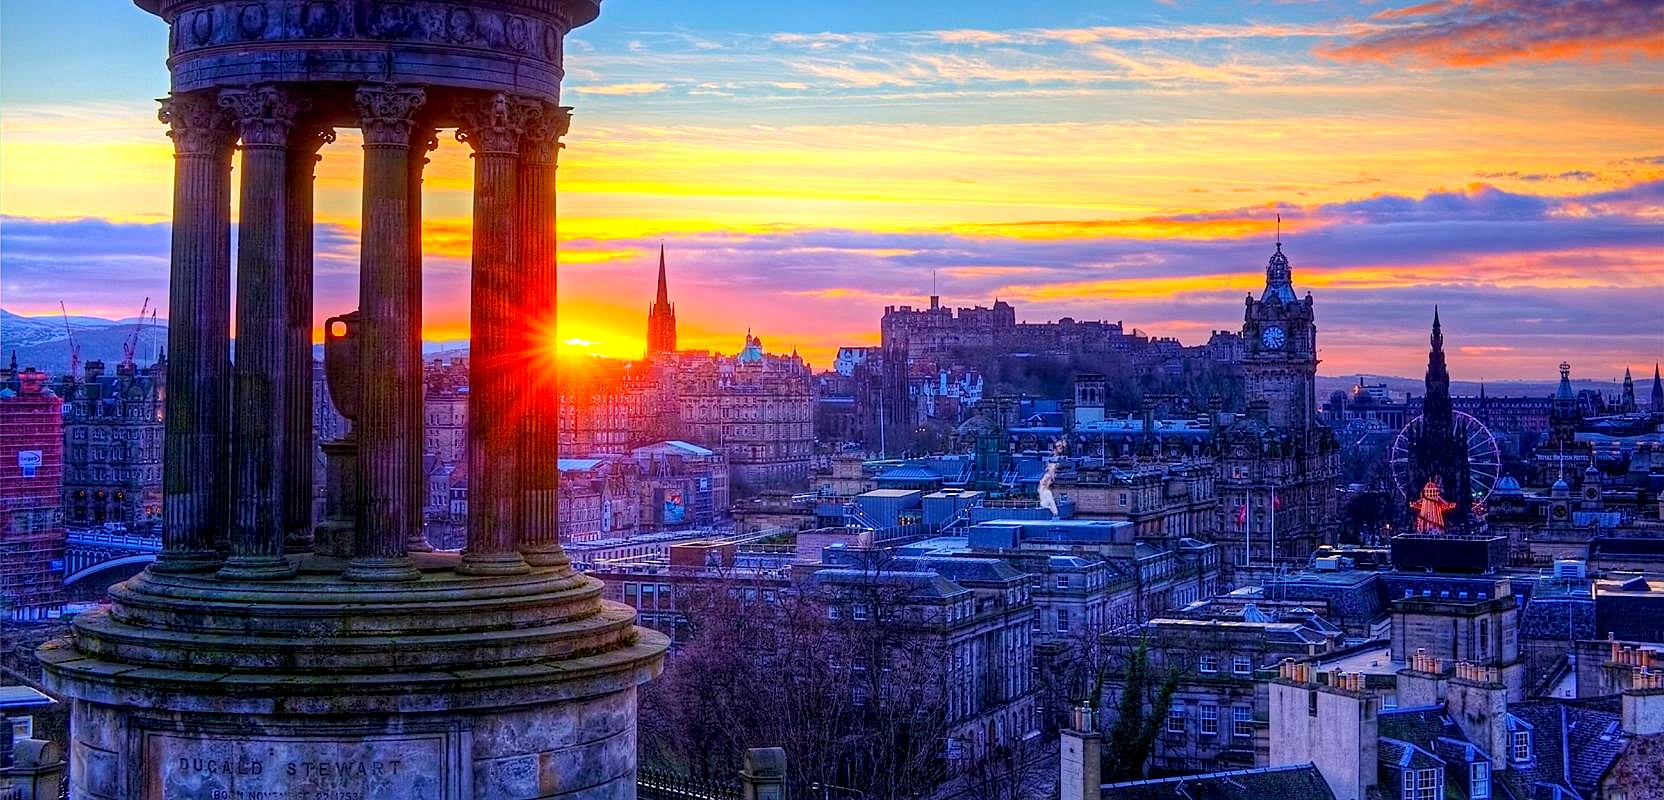 Qyteti i Edinburghut